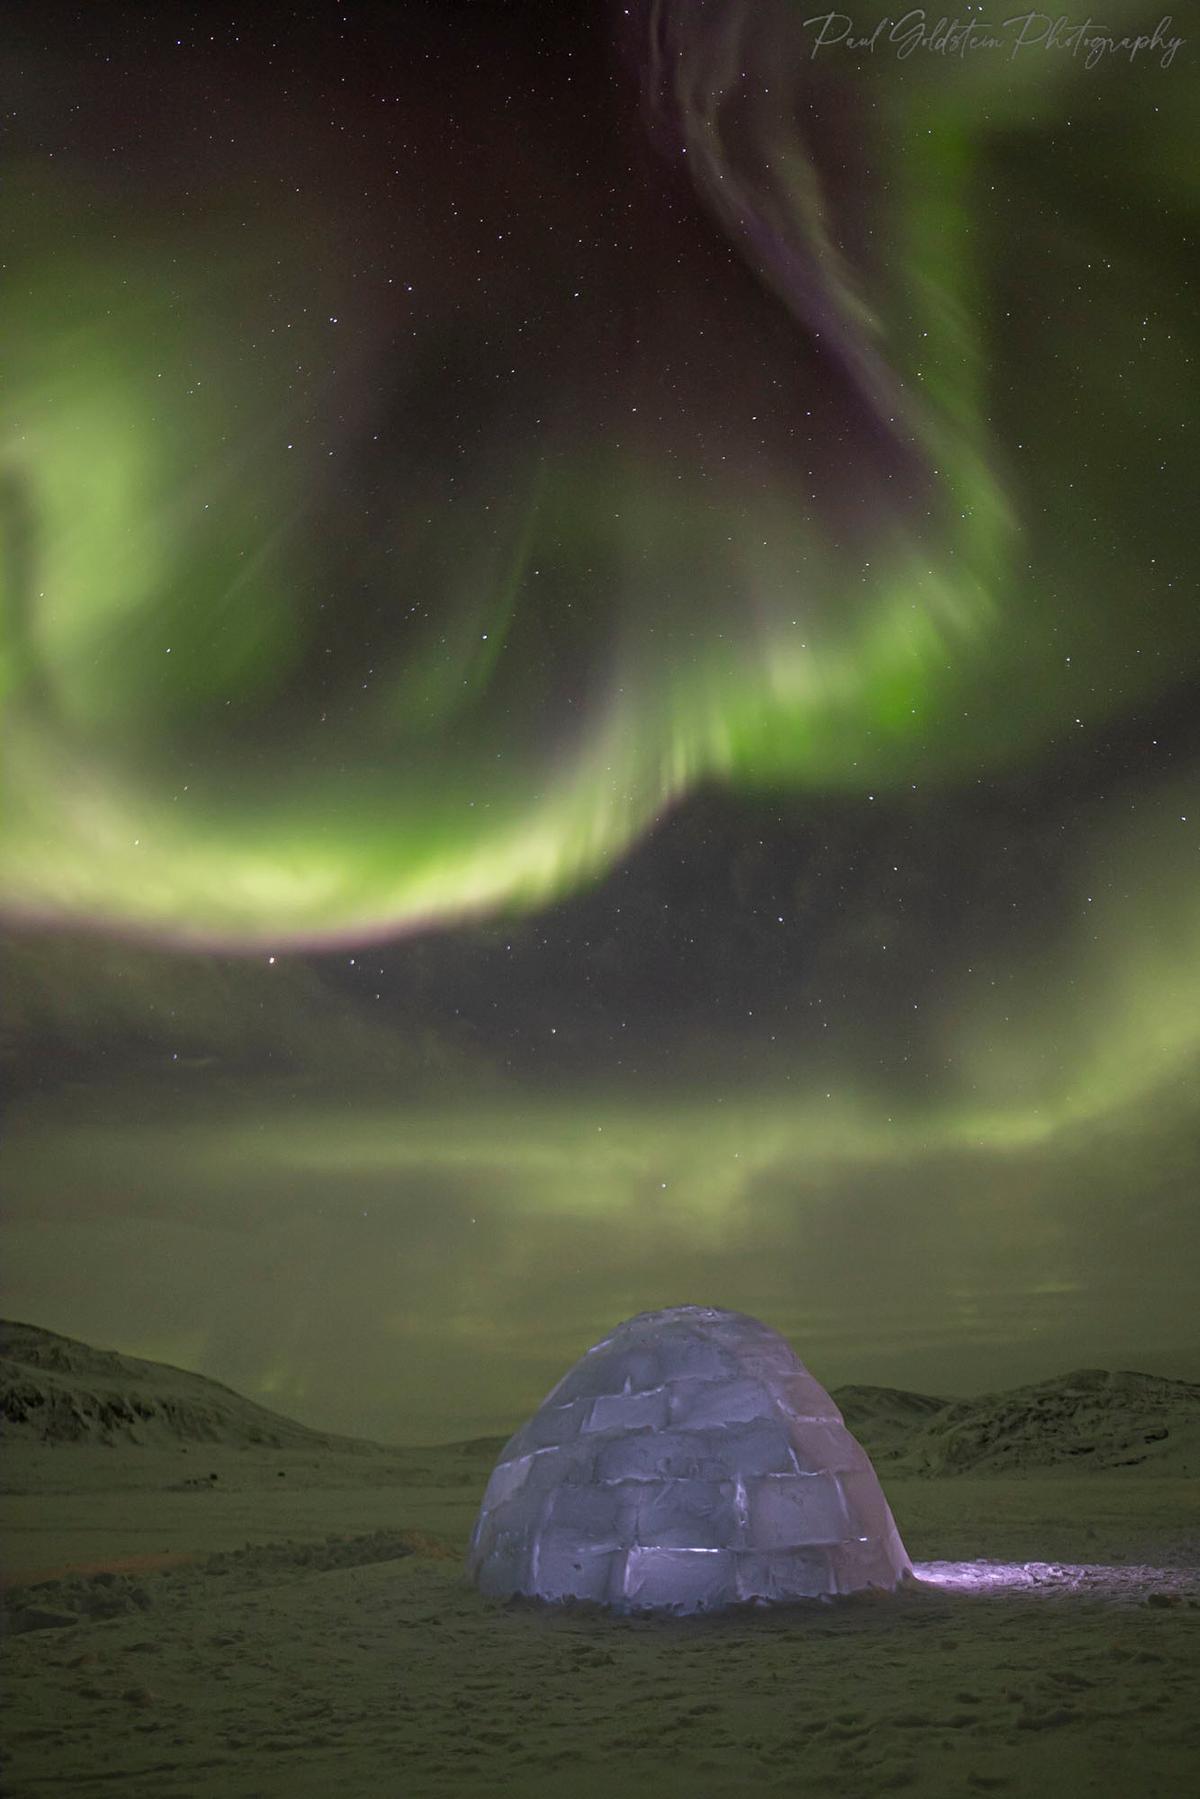 Northern lights dancing above an igloo in Nunavut, Canada. (Courtesy of <a href="https://www.instagram.com/paulsgoldstein/">Paul Goldstein</a>)